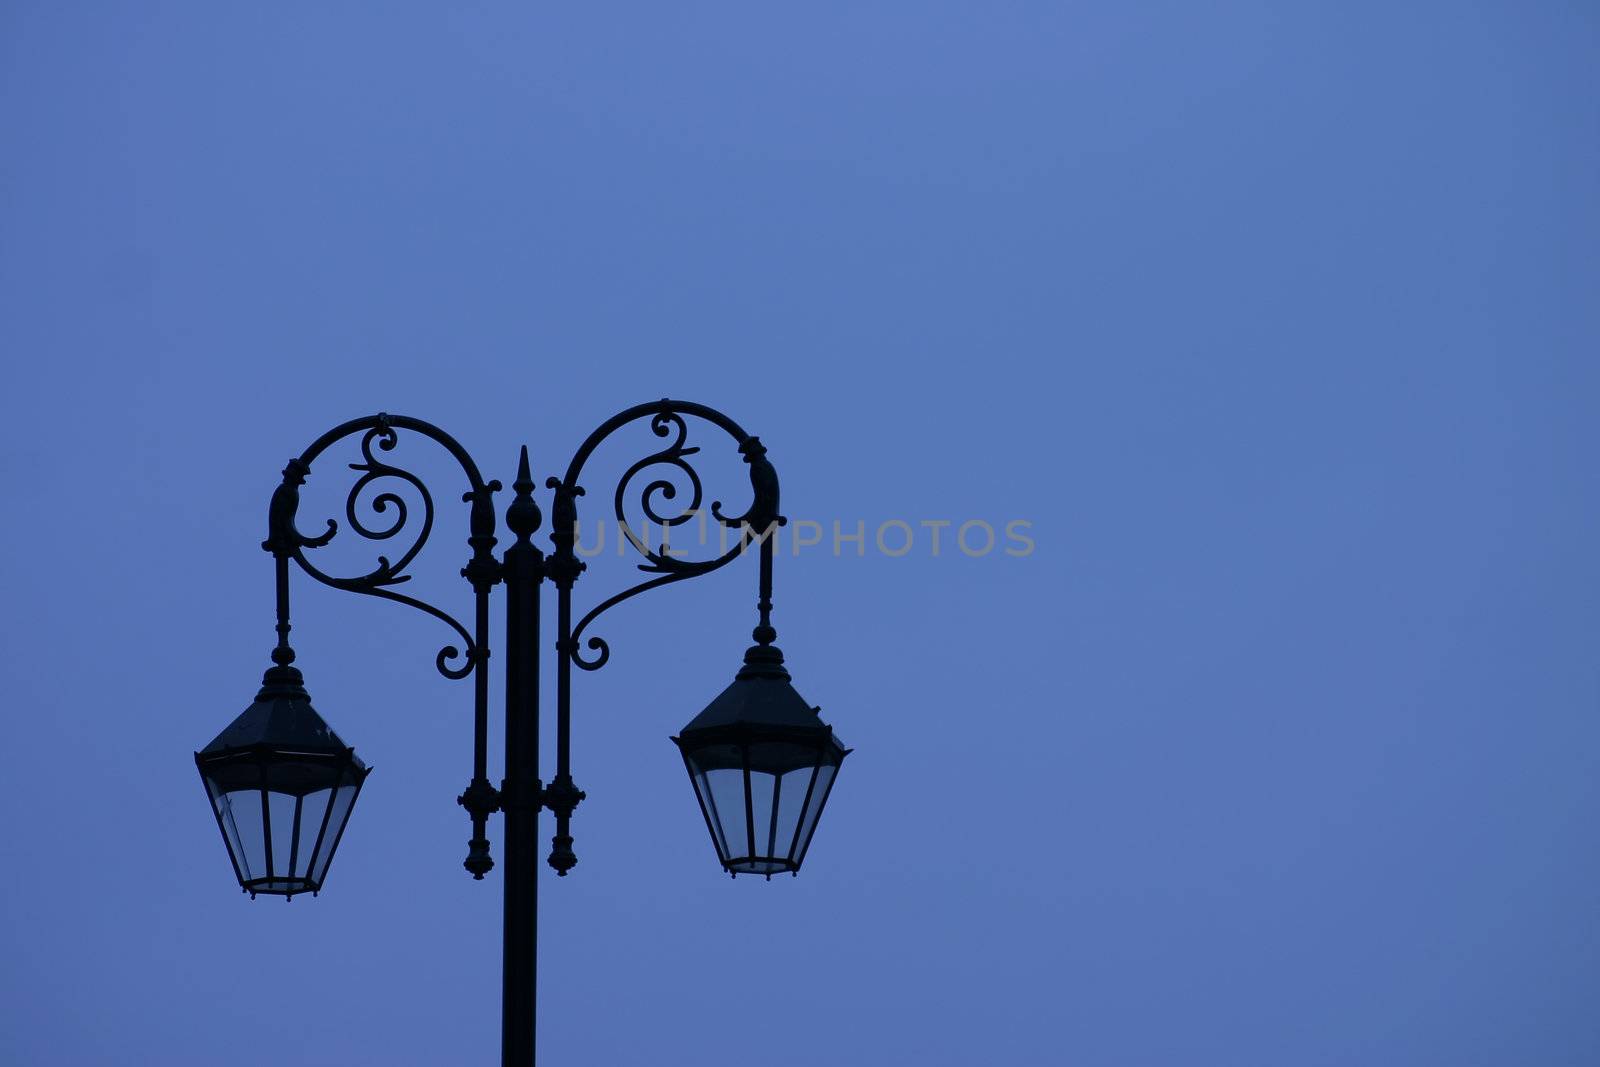 Sihouette of Old Street Light Against Blue Sky